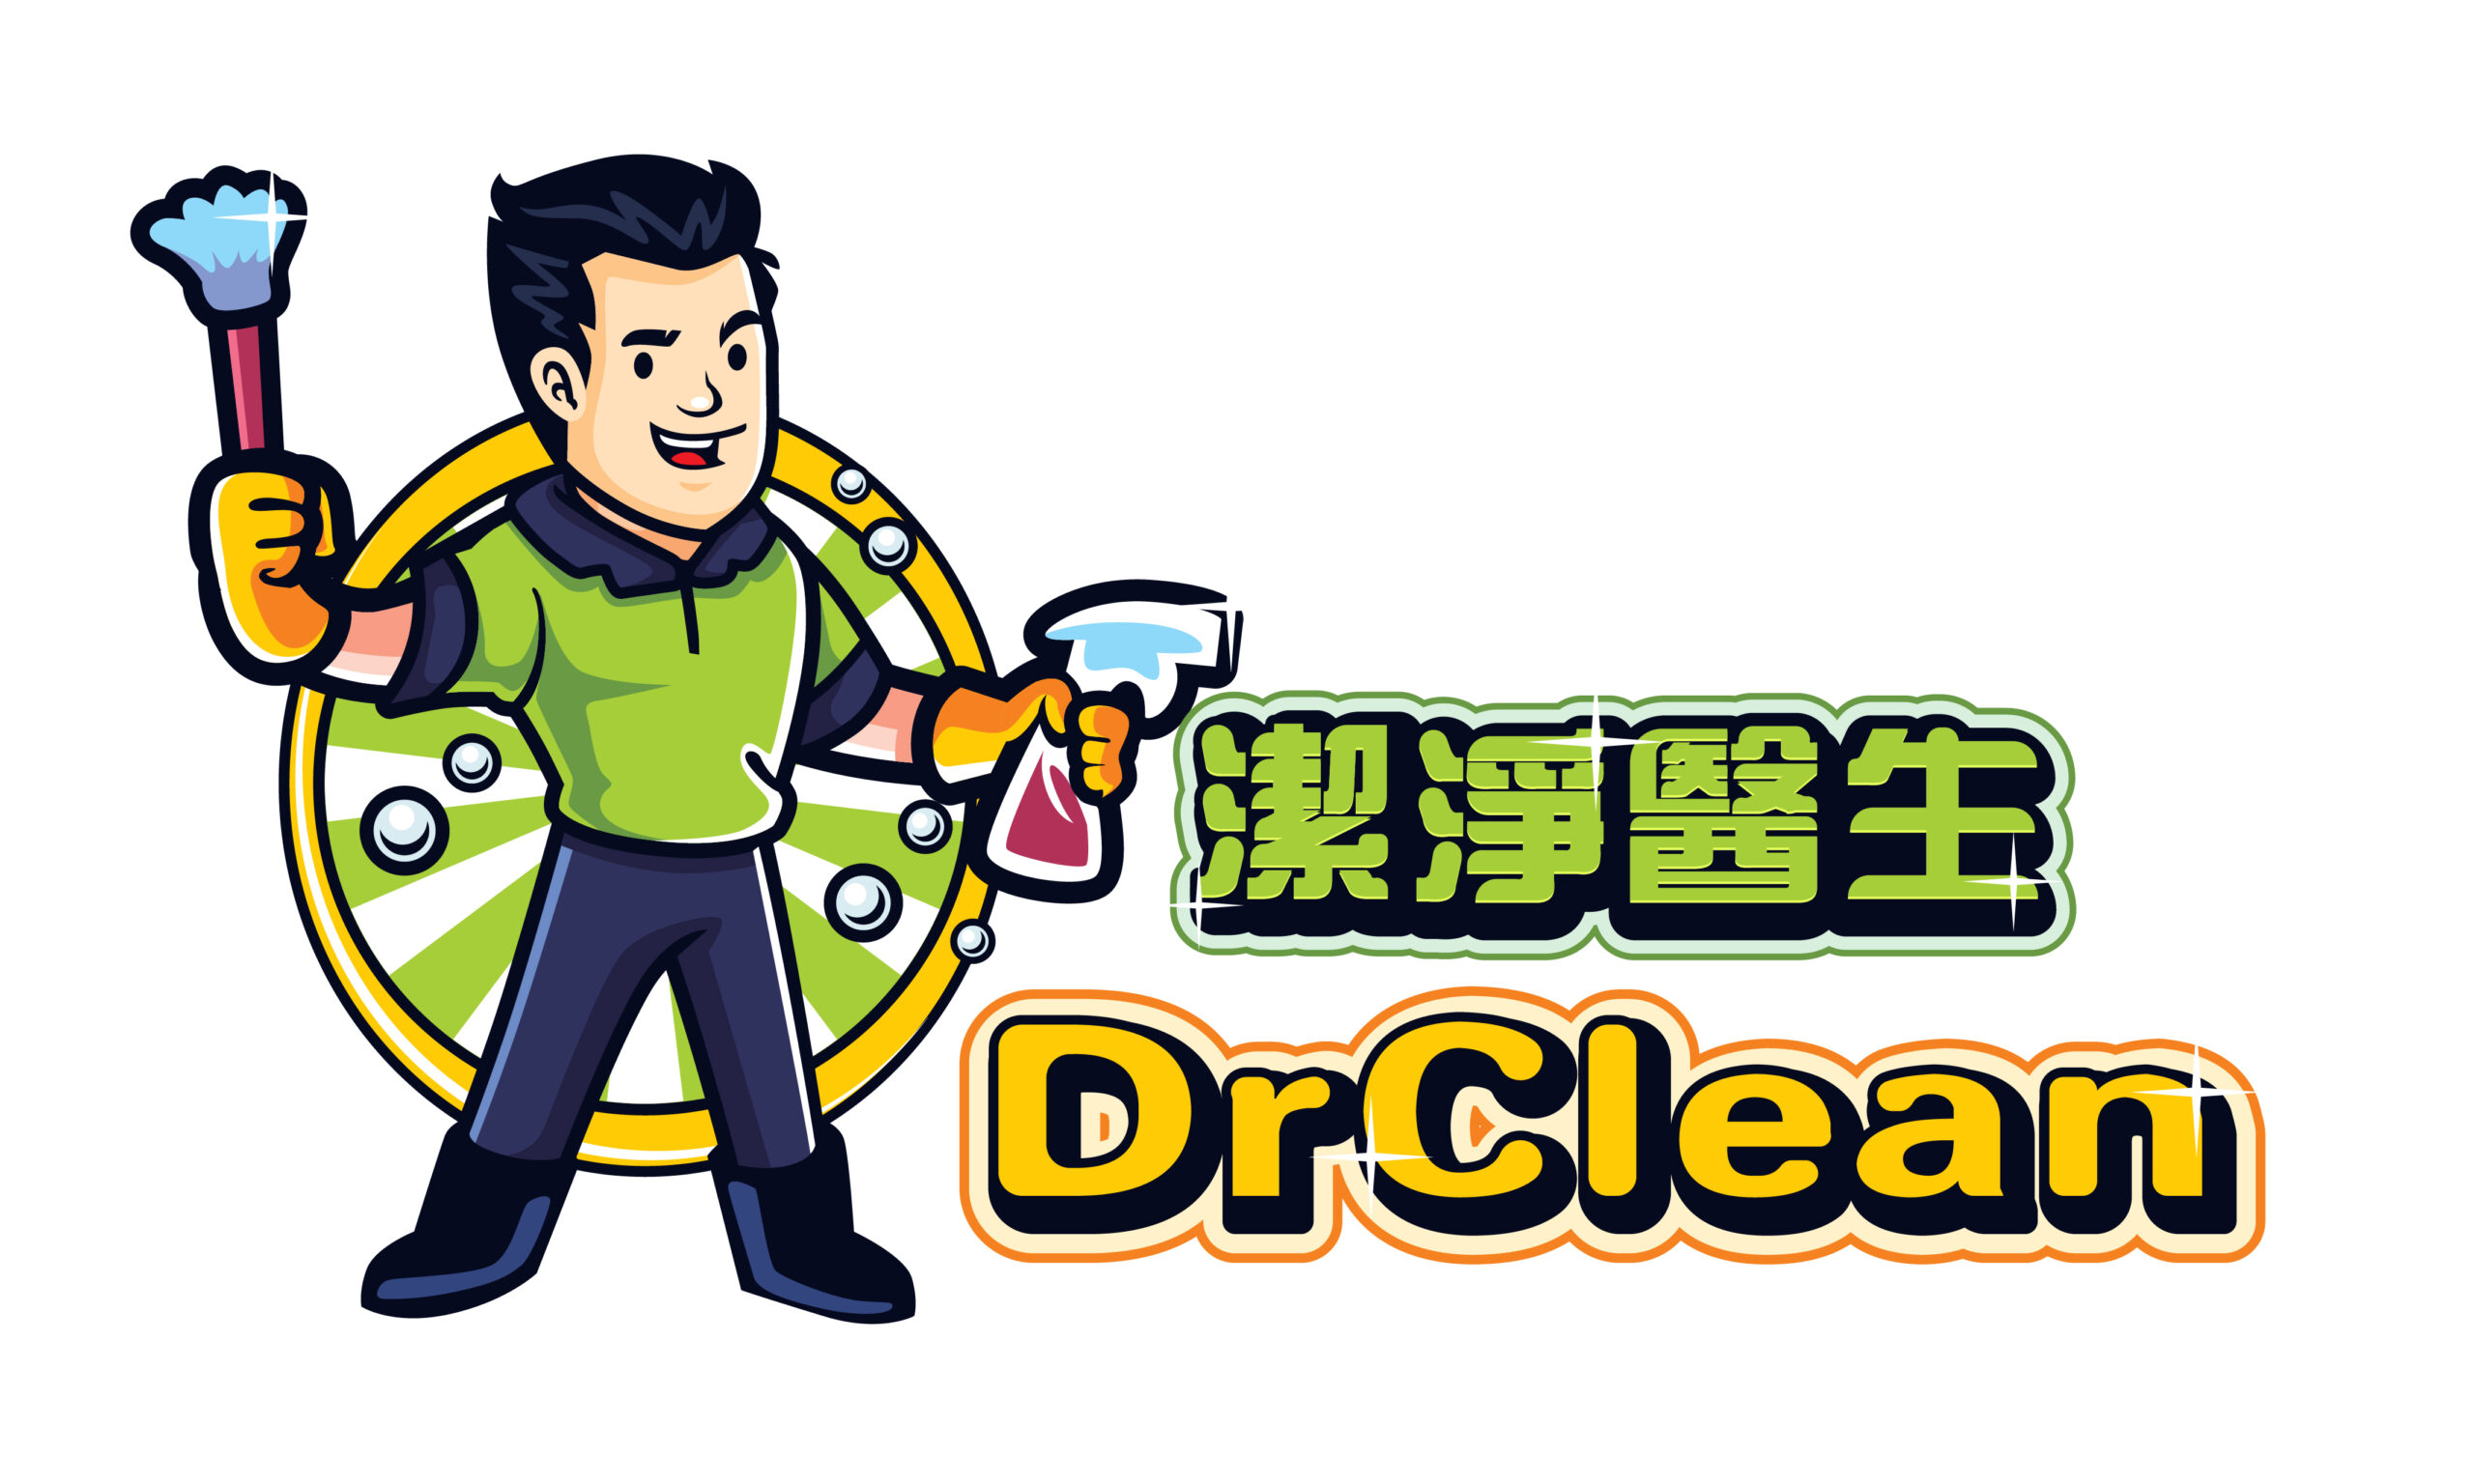 Dr.Clean – 潔淨醫生 你的清潔消毒滅蟲服務專家